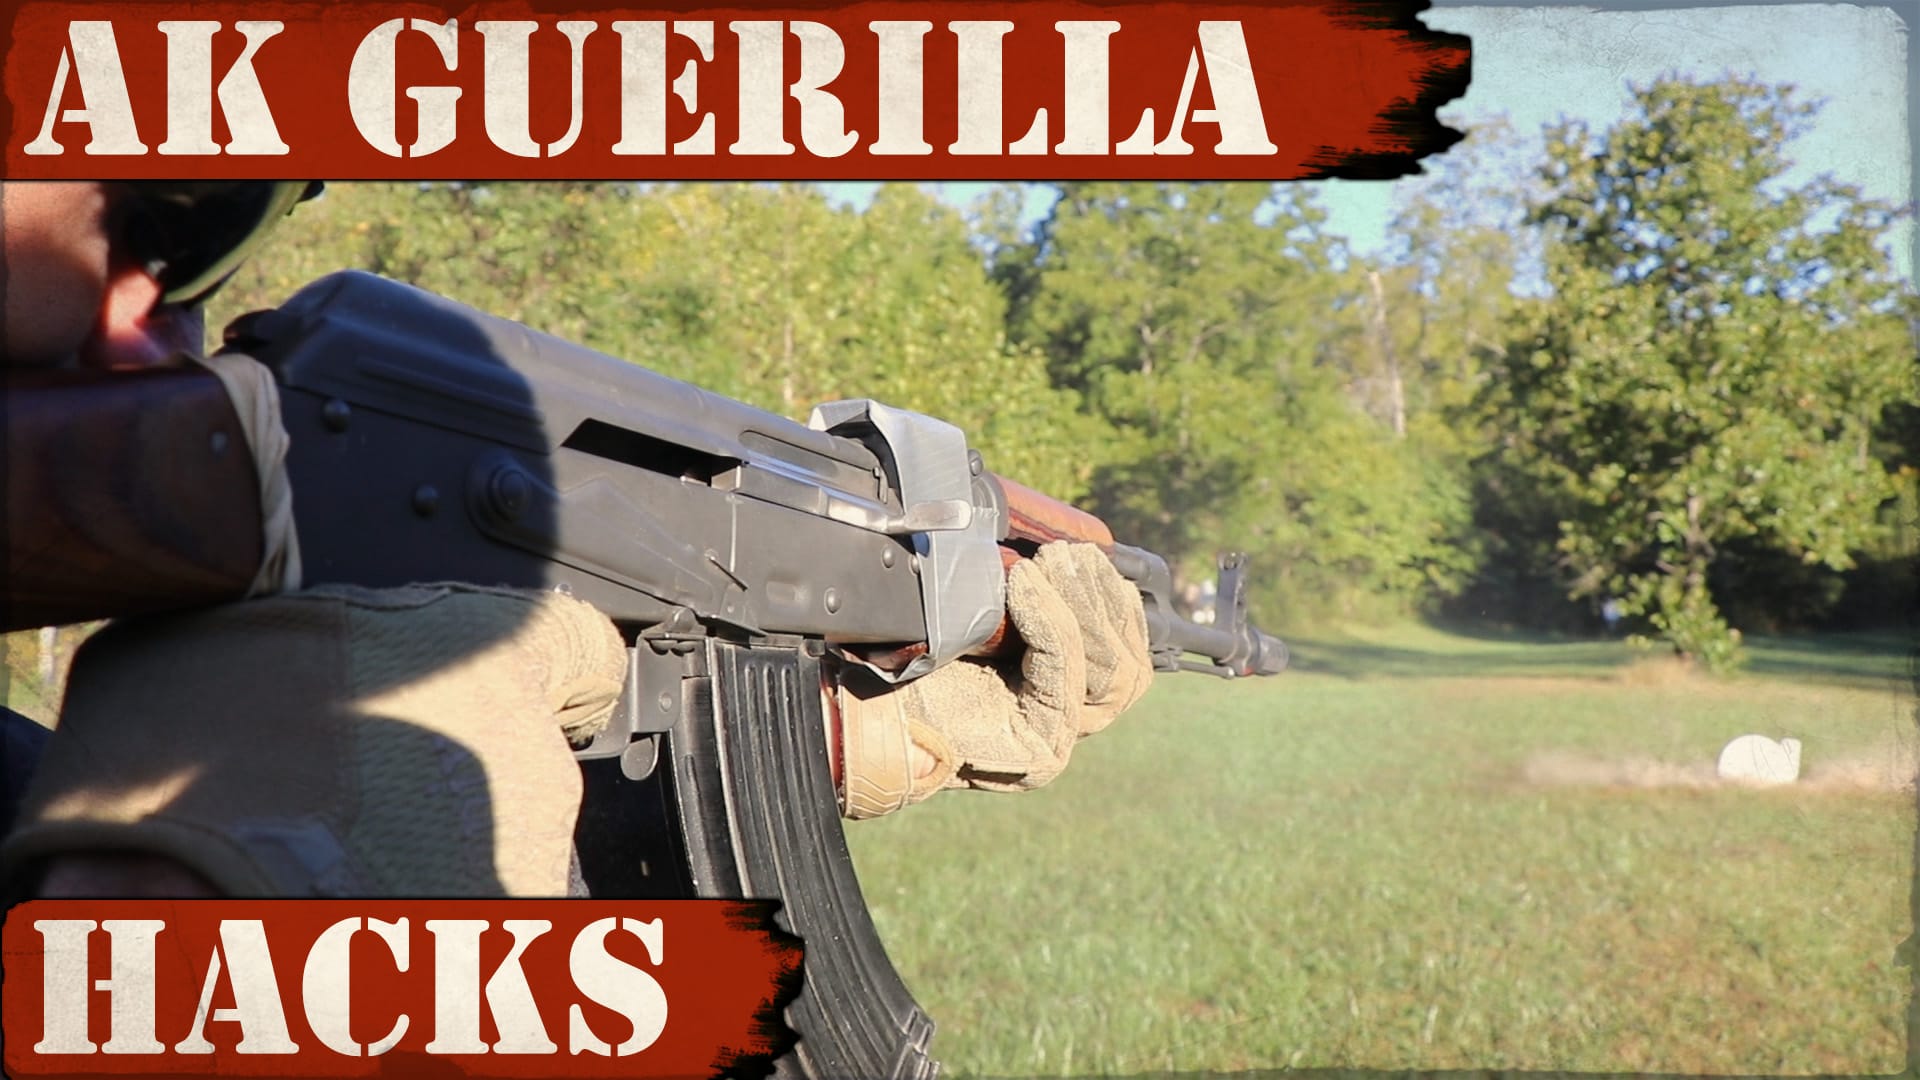 AK Guerilla Hacks – Don’t Aim! Just Hit it! Sling Hack!